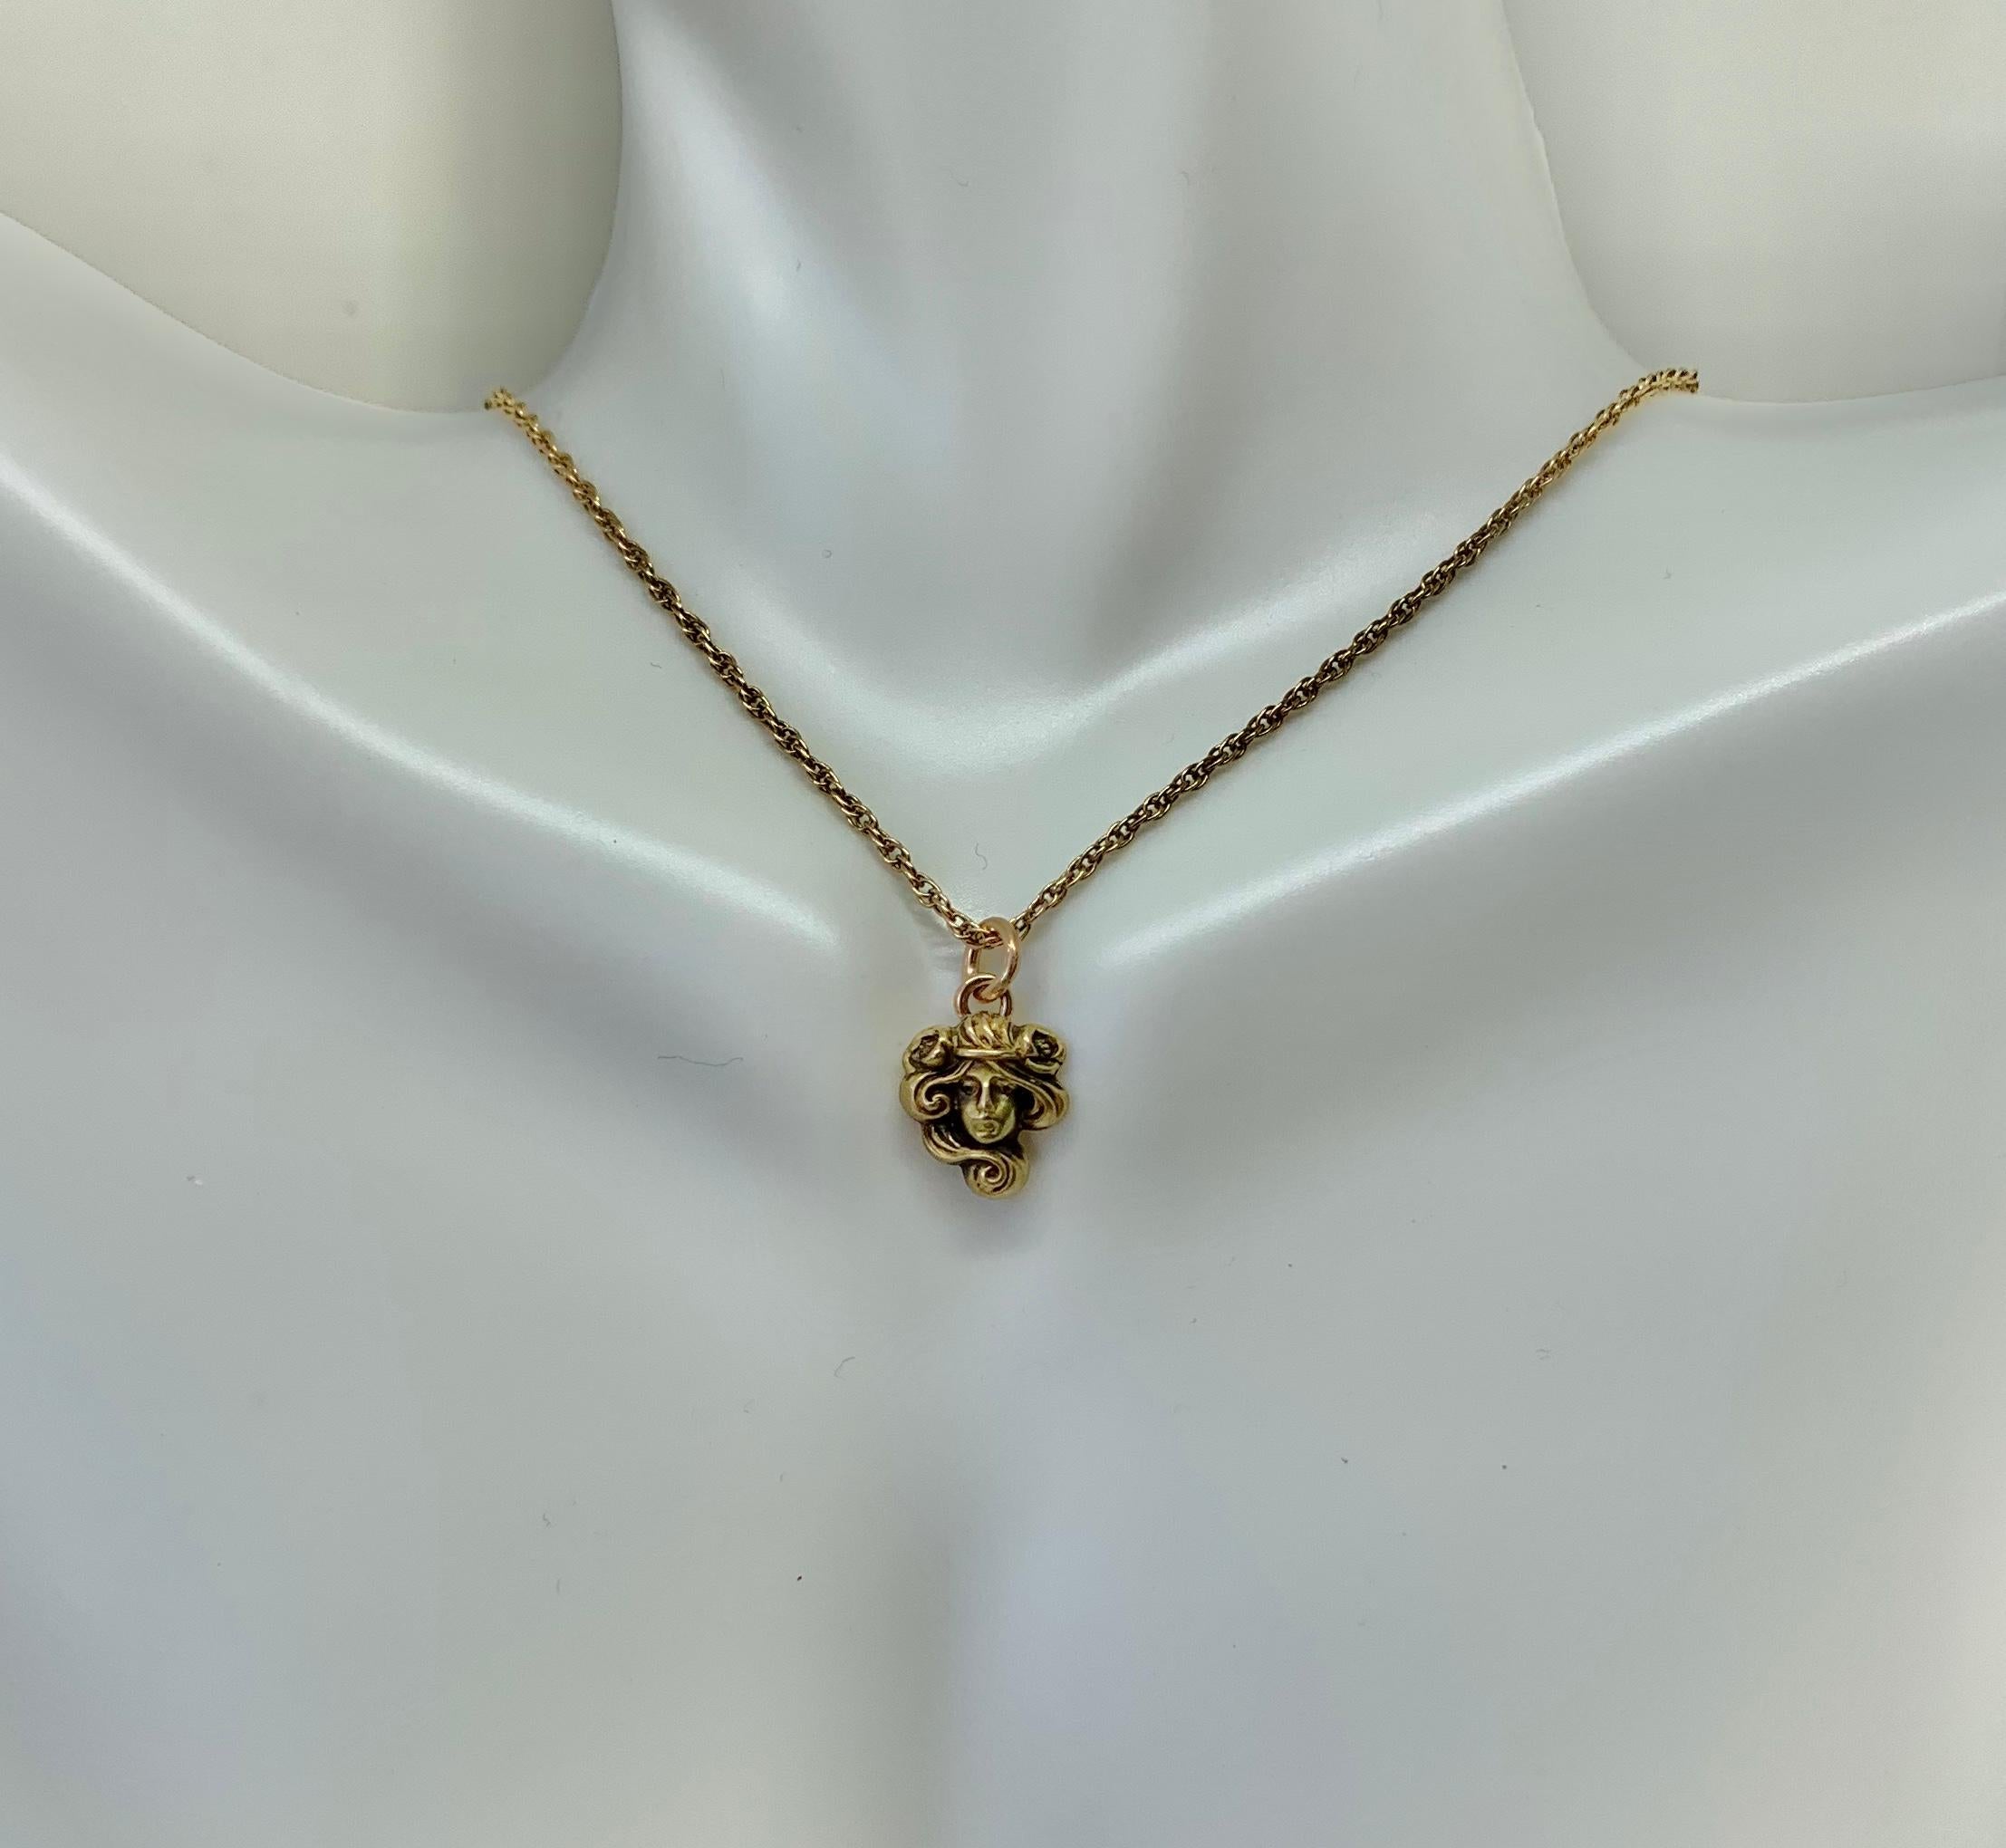 Women's Art Nouveau Woman Goddess Flower Pendant Necklace by Link & Angell 14 Karat Gold For Sale